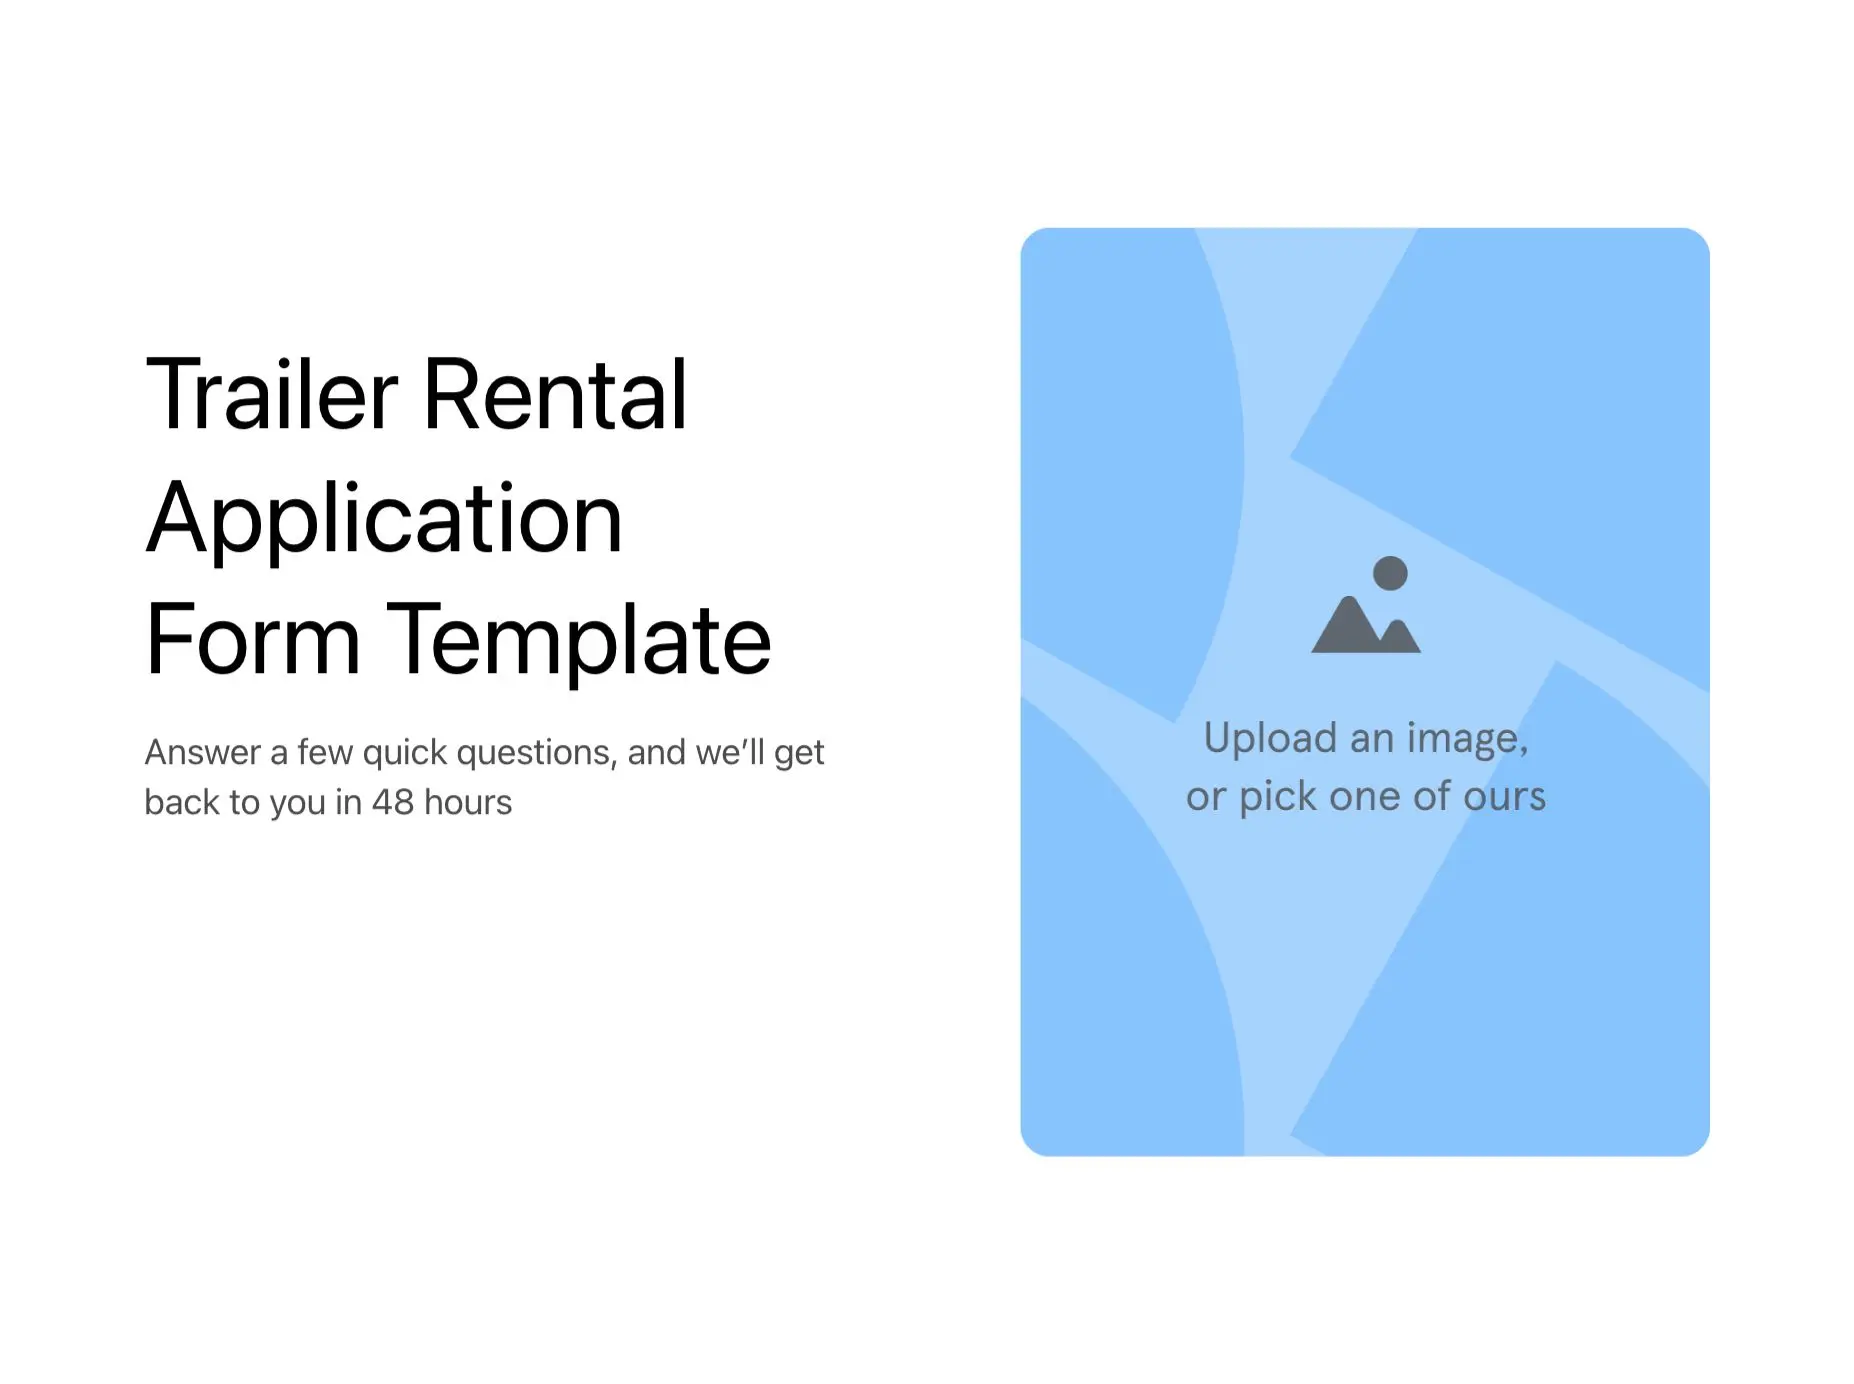 Trailer Rental Application Form Template Hero